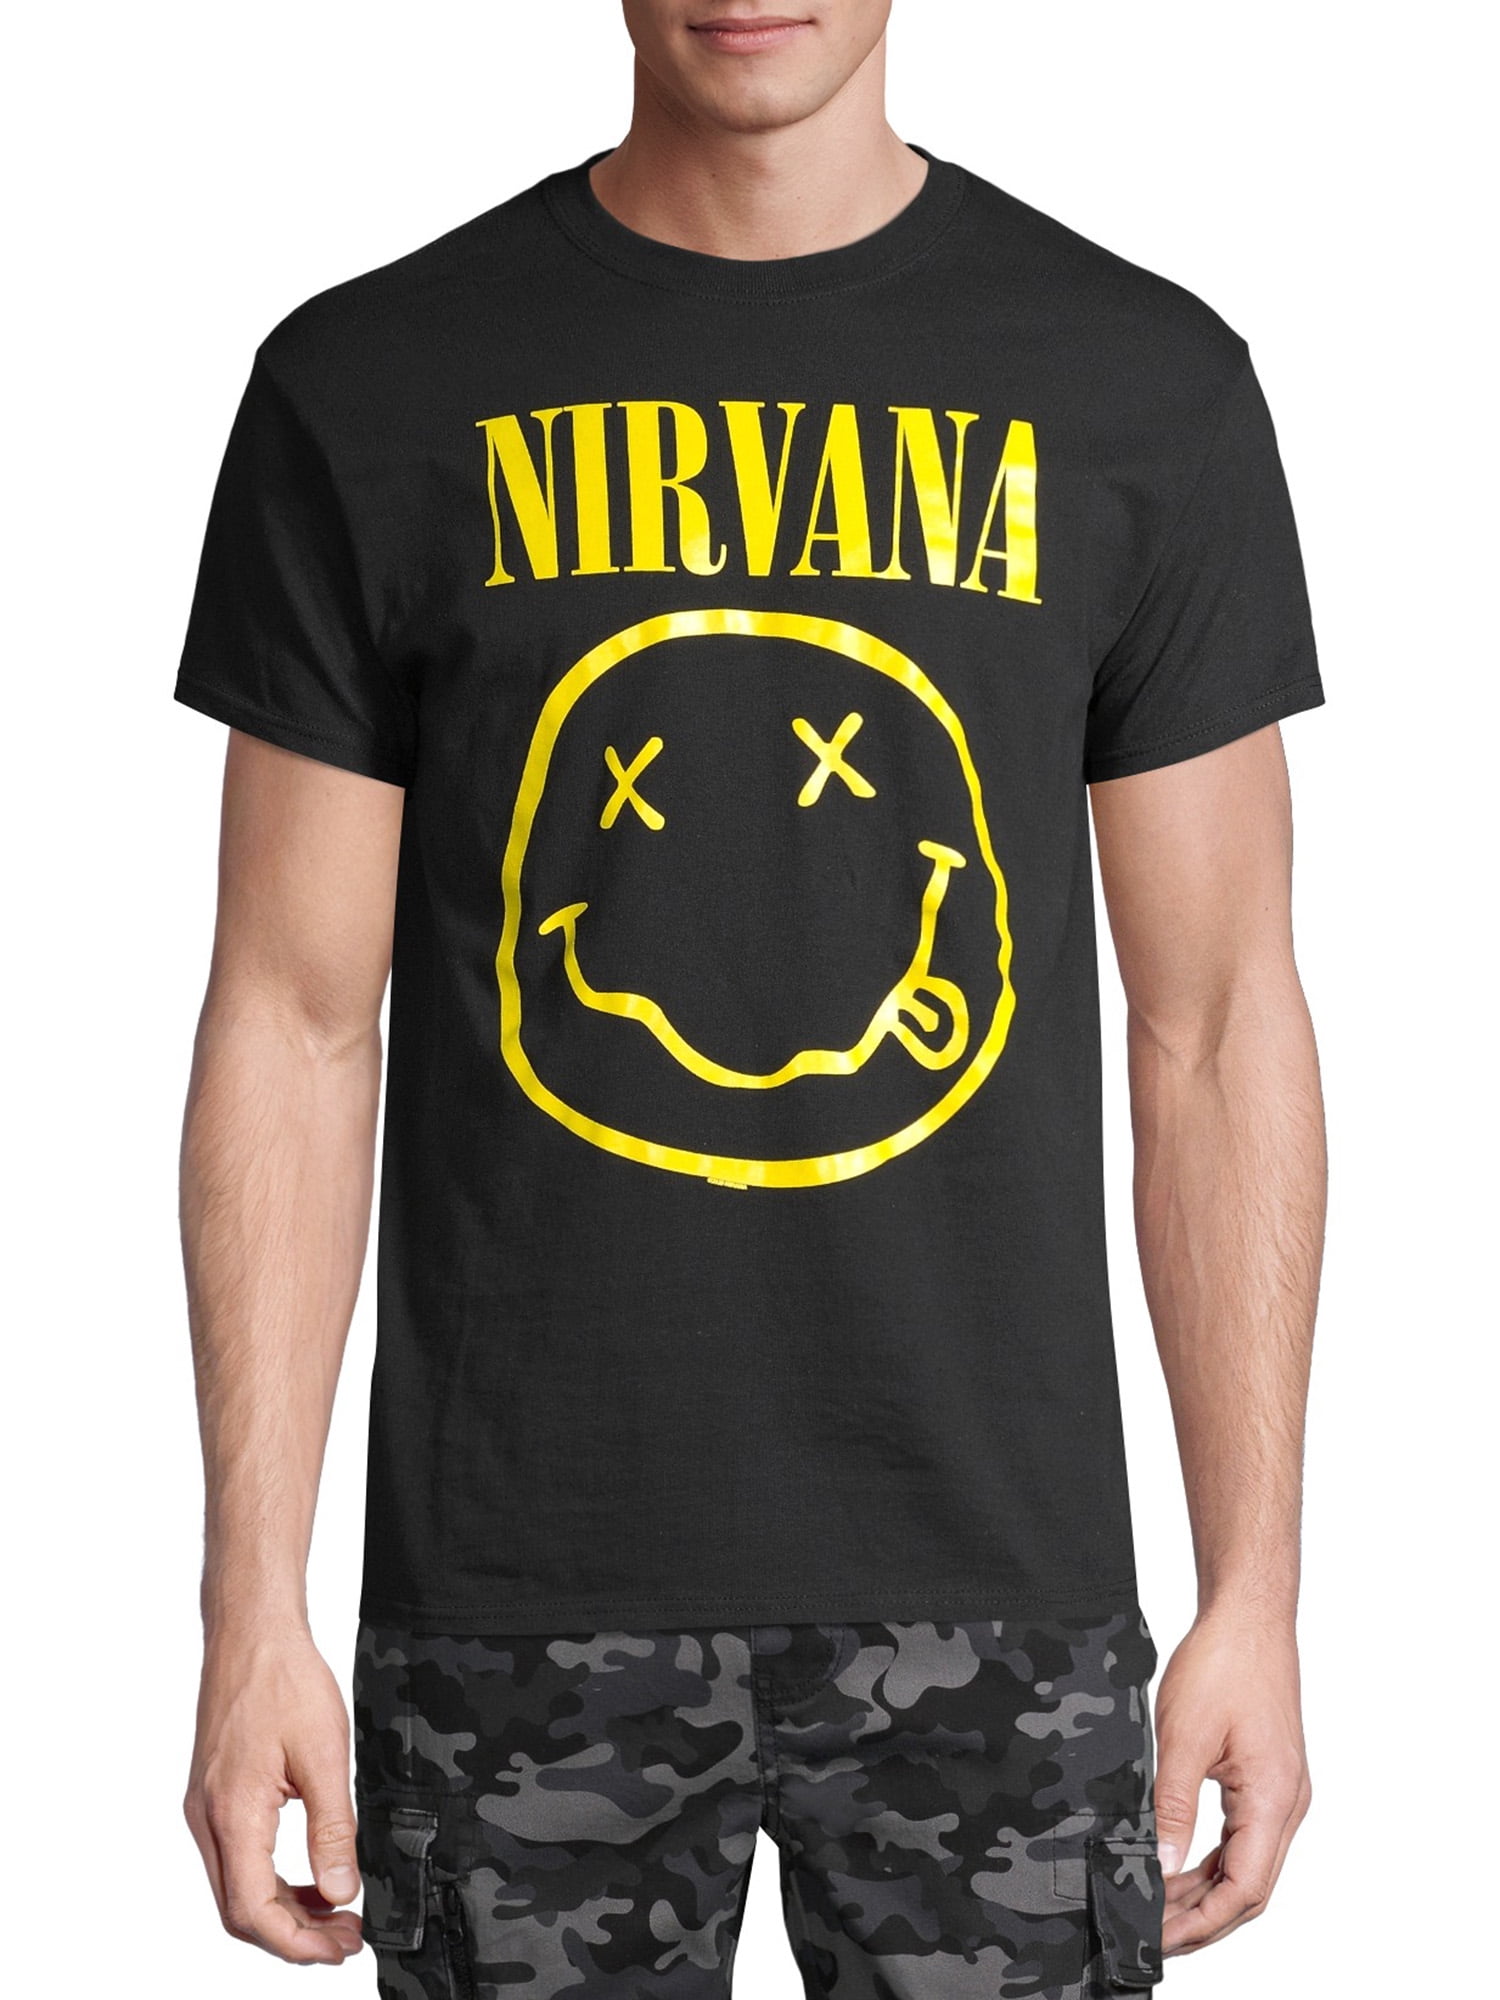 Nirvana Smiley Men's and Big Men's Graphic T-shirt - Walmart.com